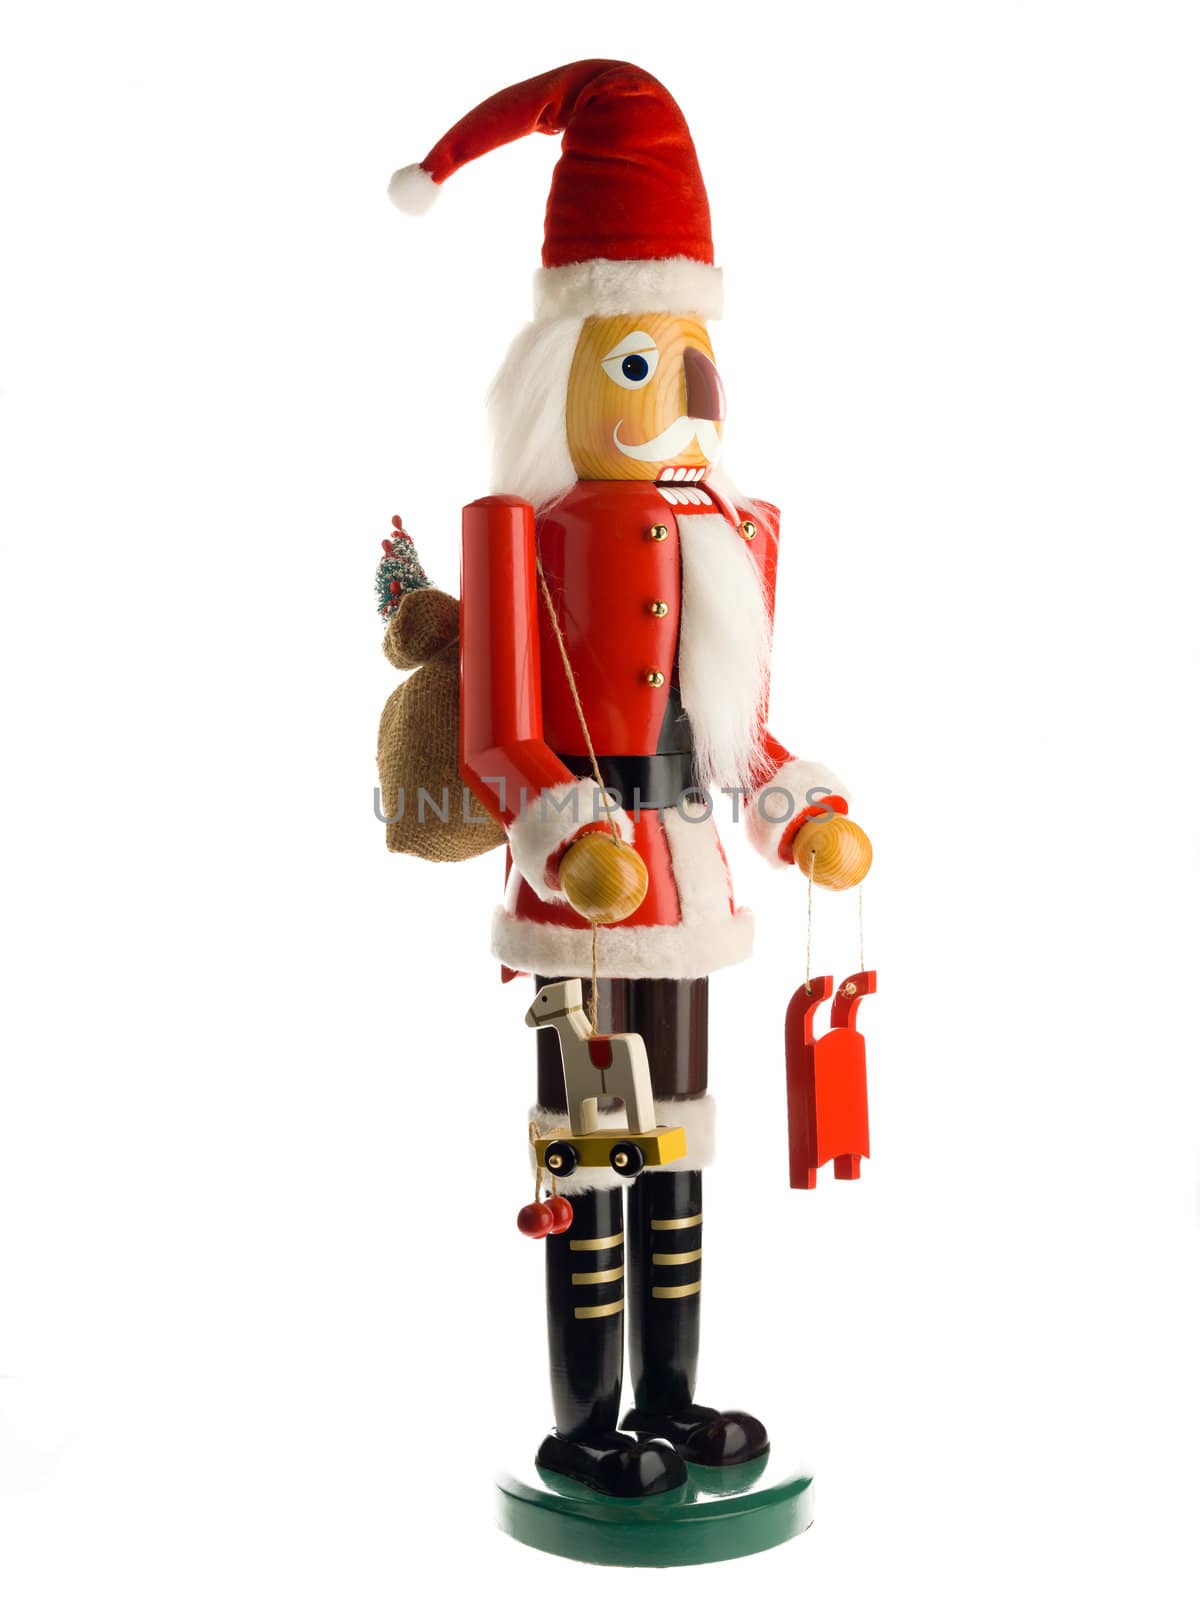 Close-up shot of figurine of a Santa Claus.